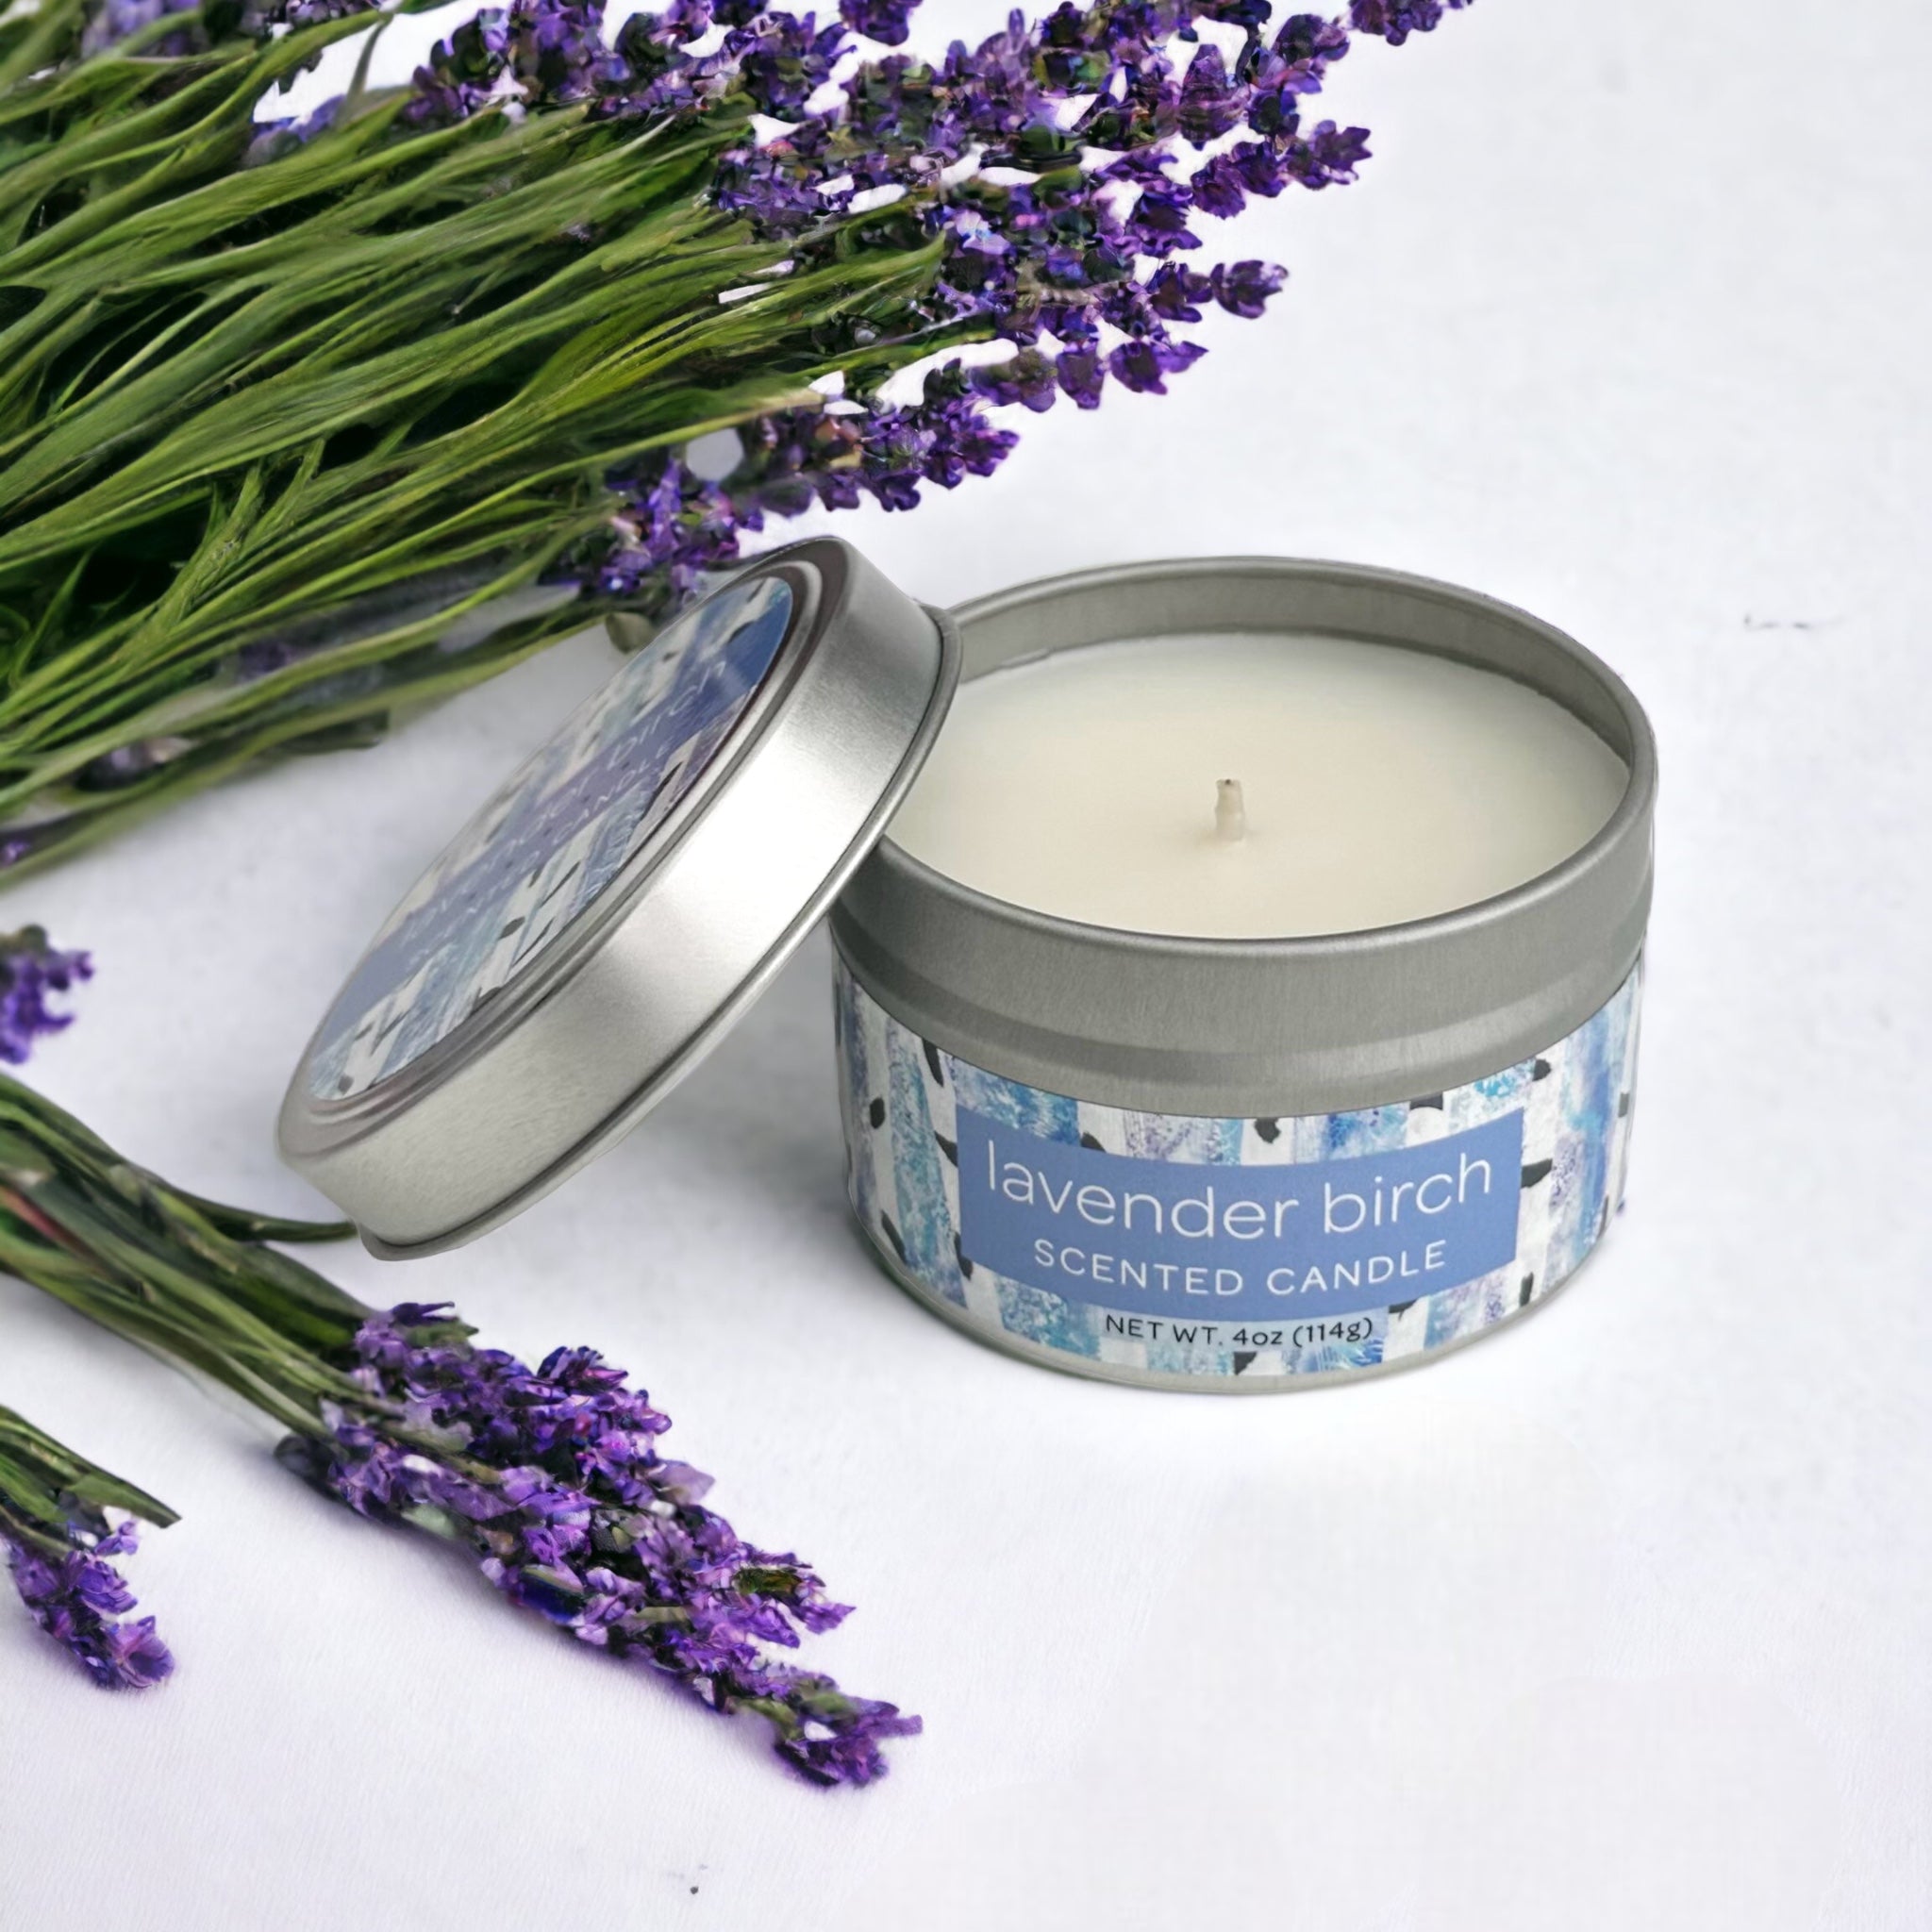 Lavender Birch Candle